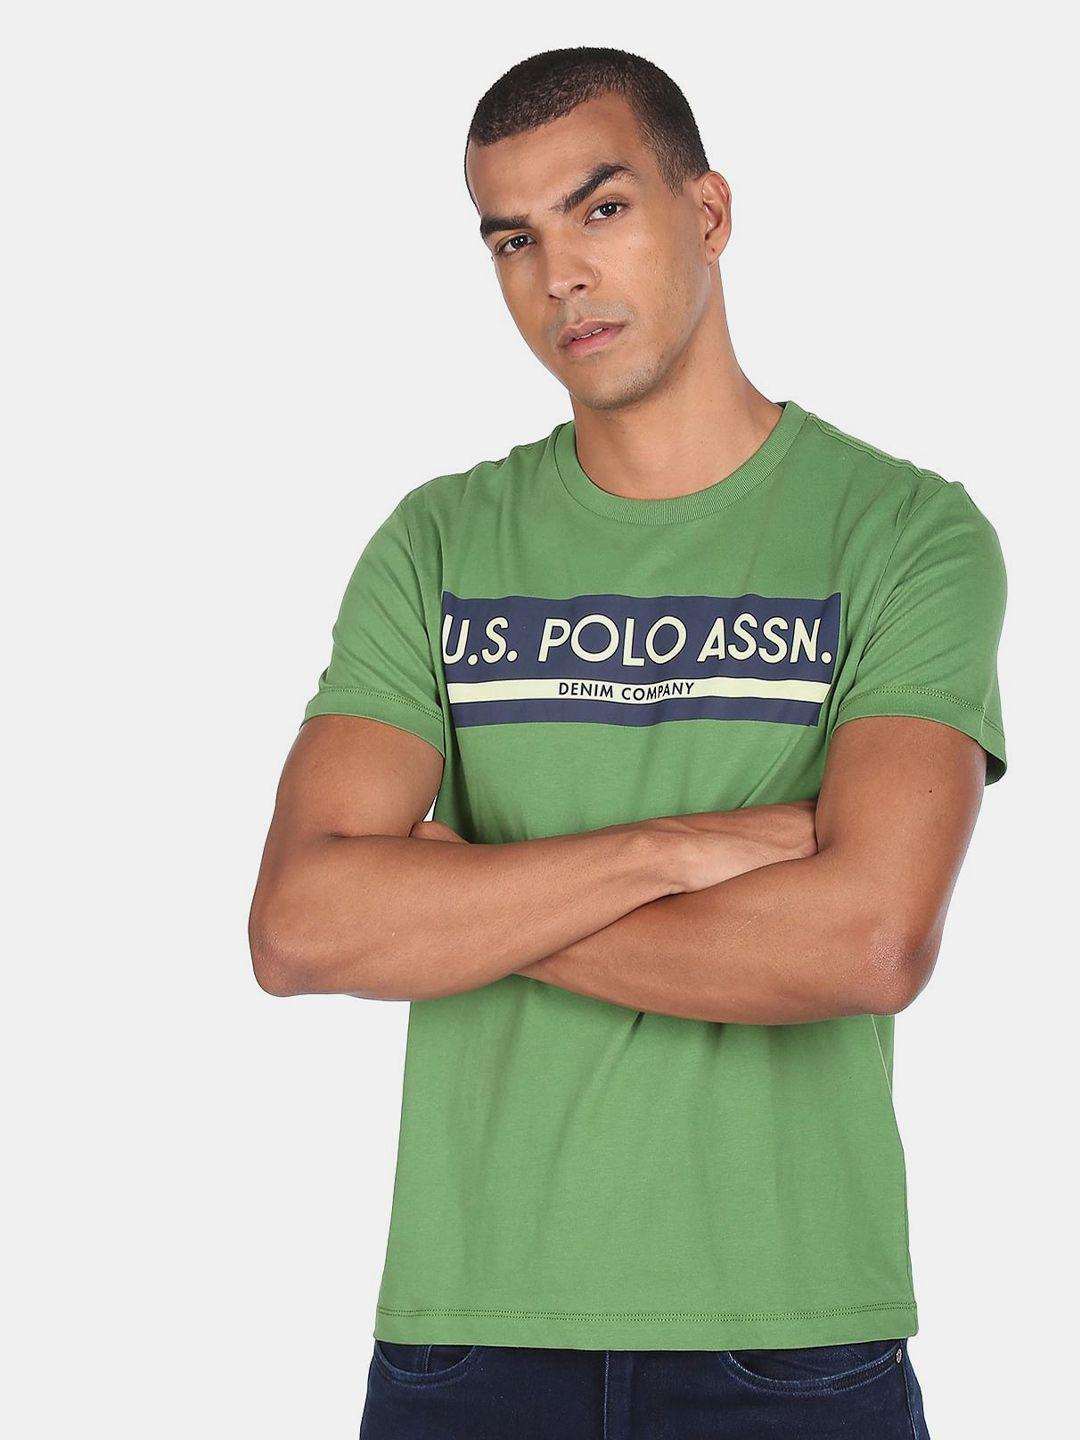 u.s.-polo-assn.-denim-co.men-green-typography-printed-cotton-t-shirt